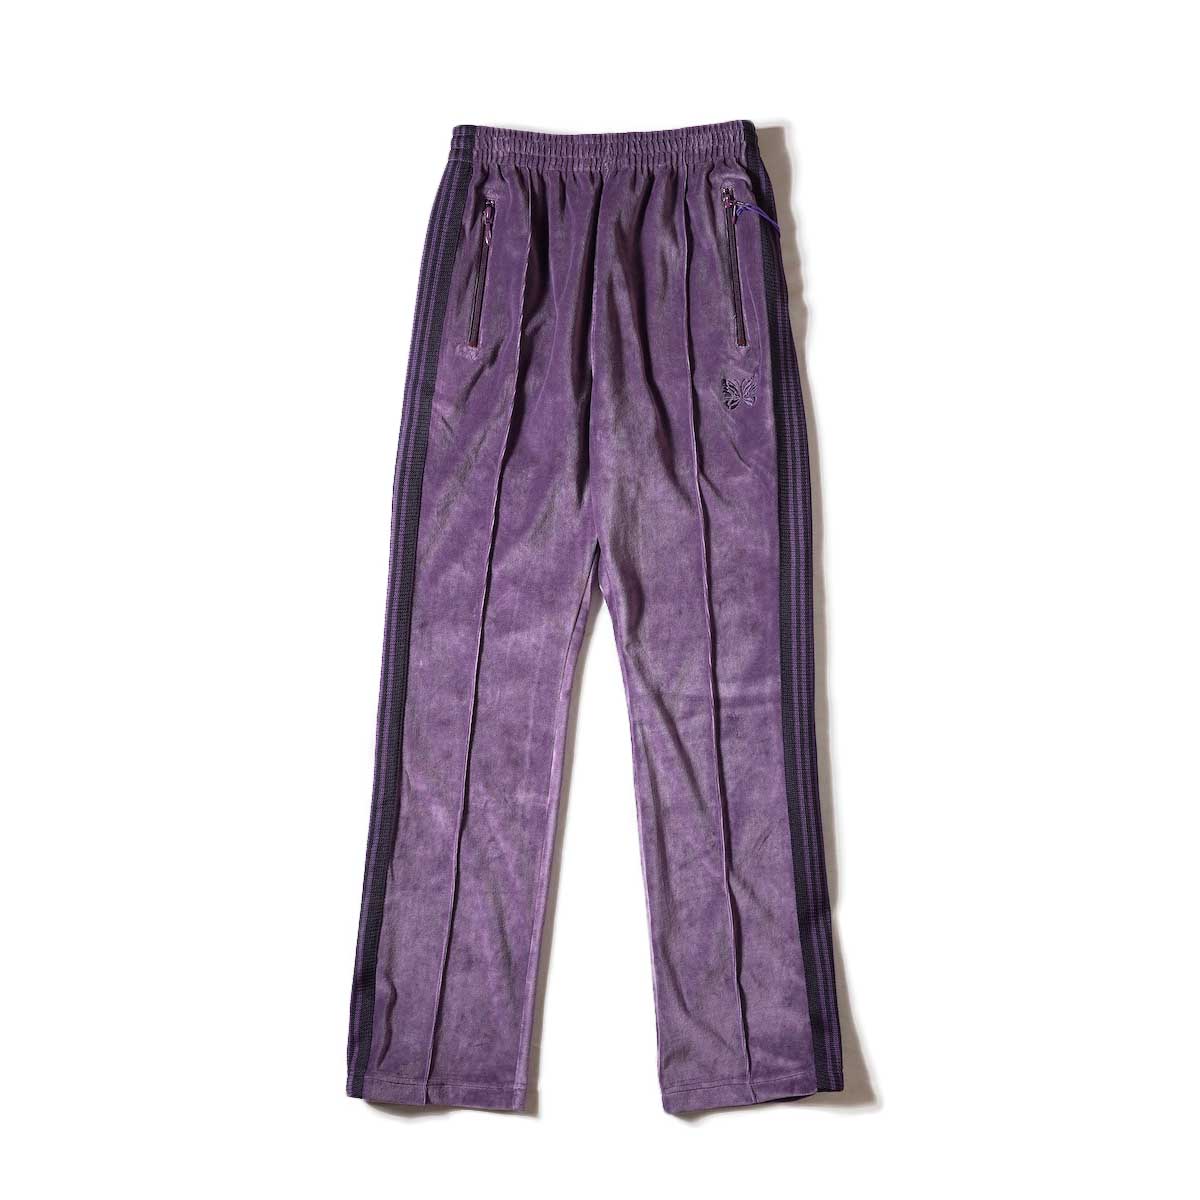 Needles / Narrow Track Pant - C/Pe Velour (Purple)